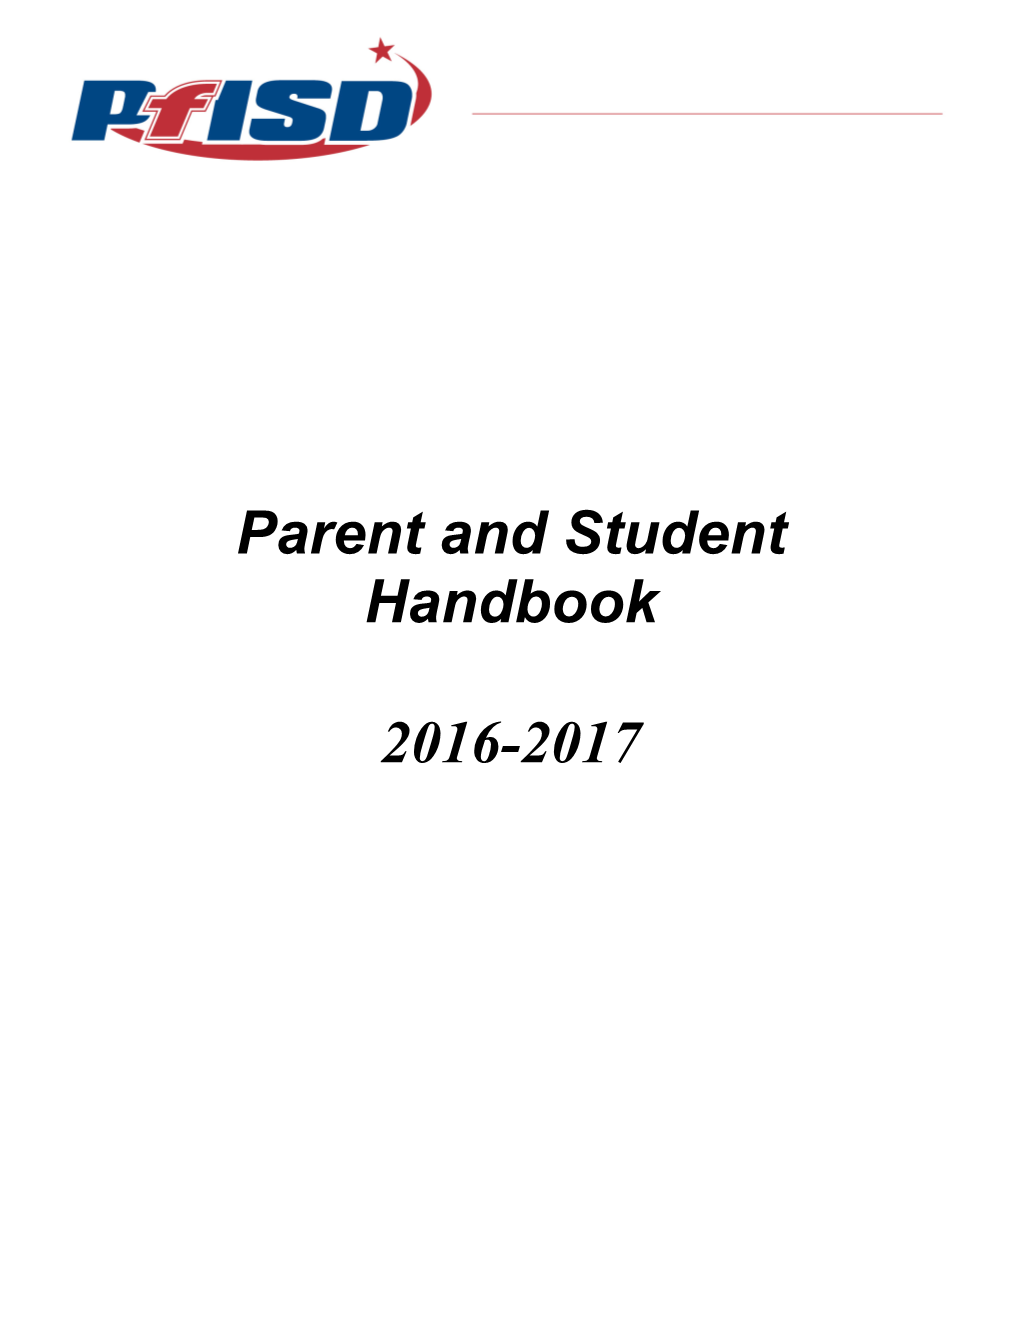 Parent and Student Handbook 2016-2017